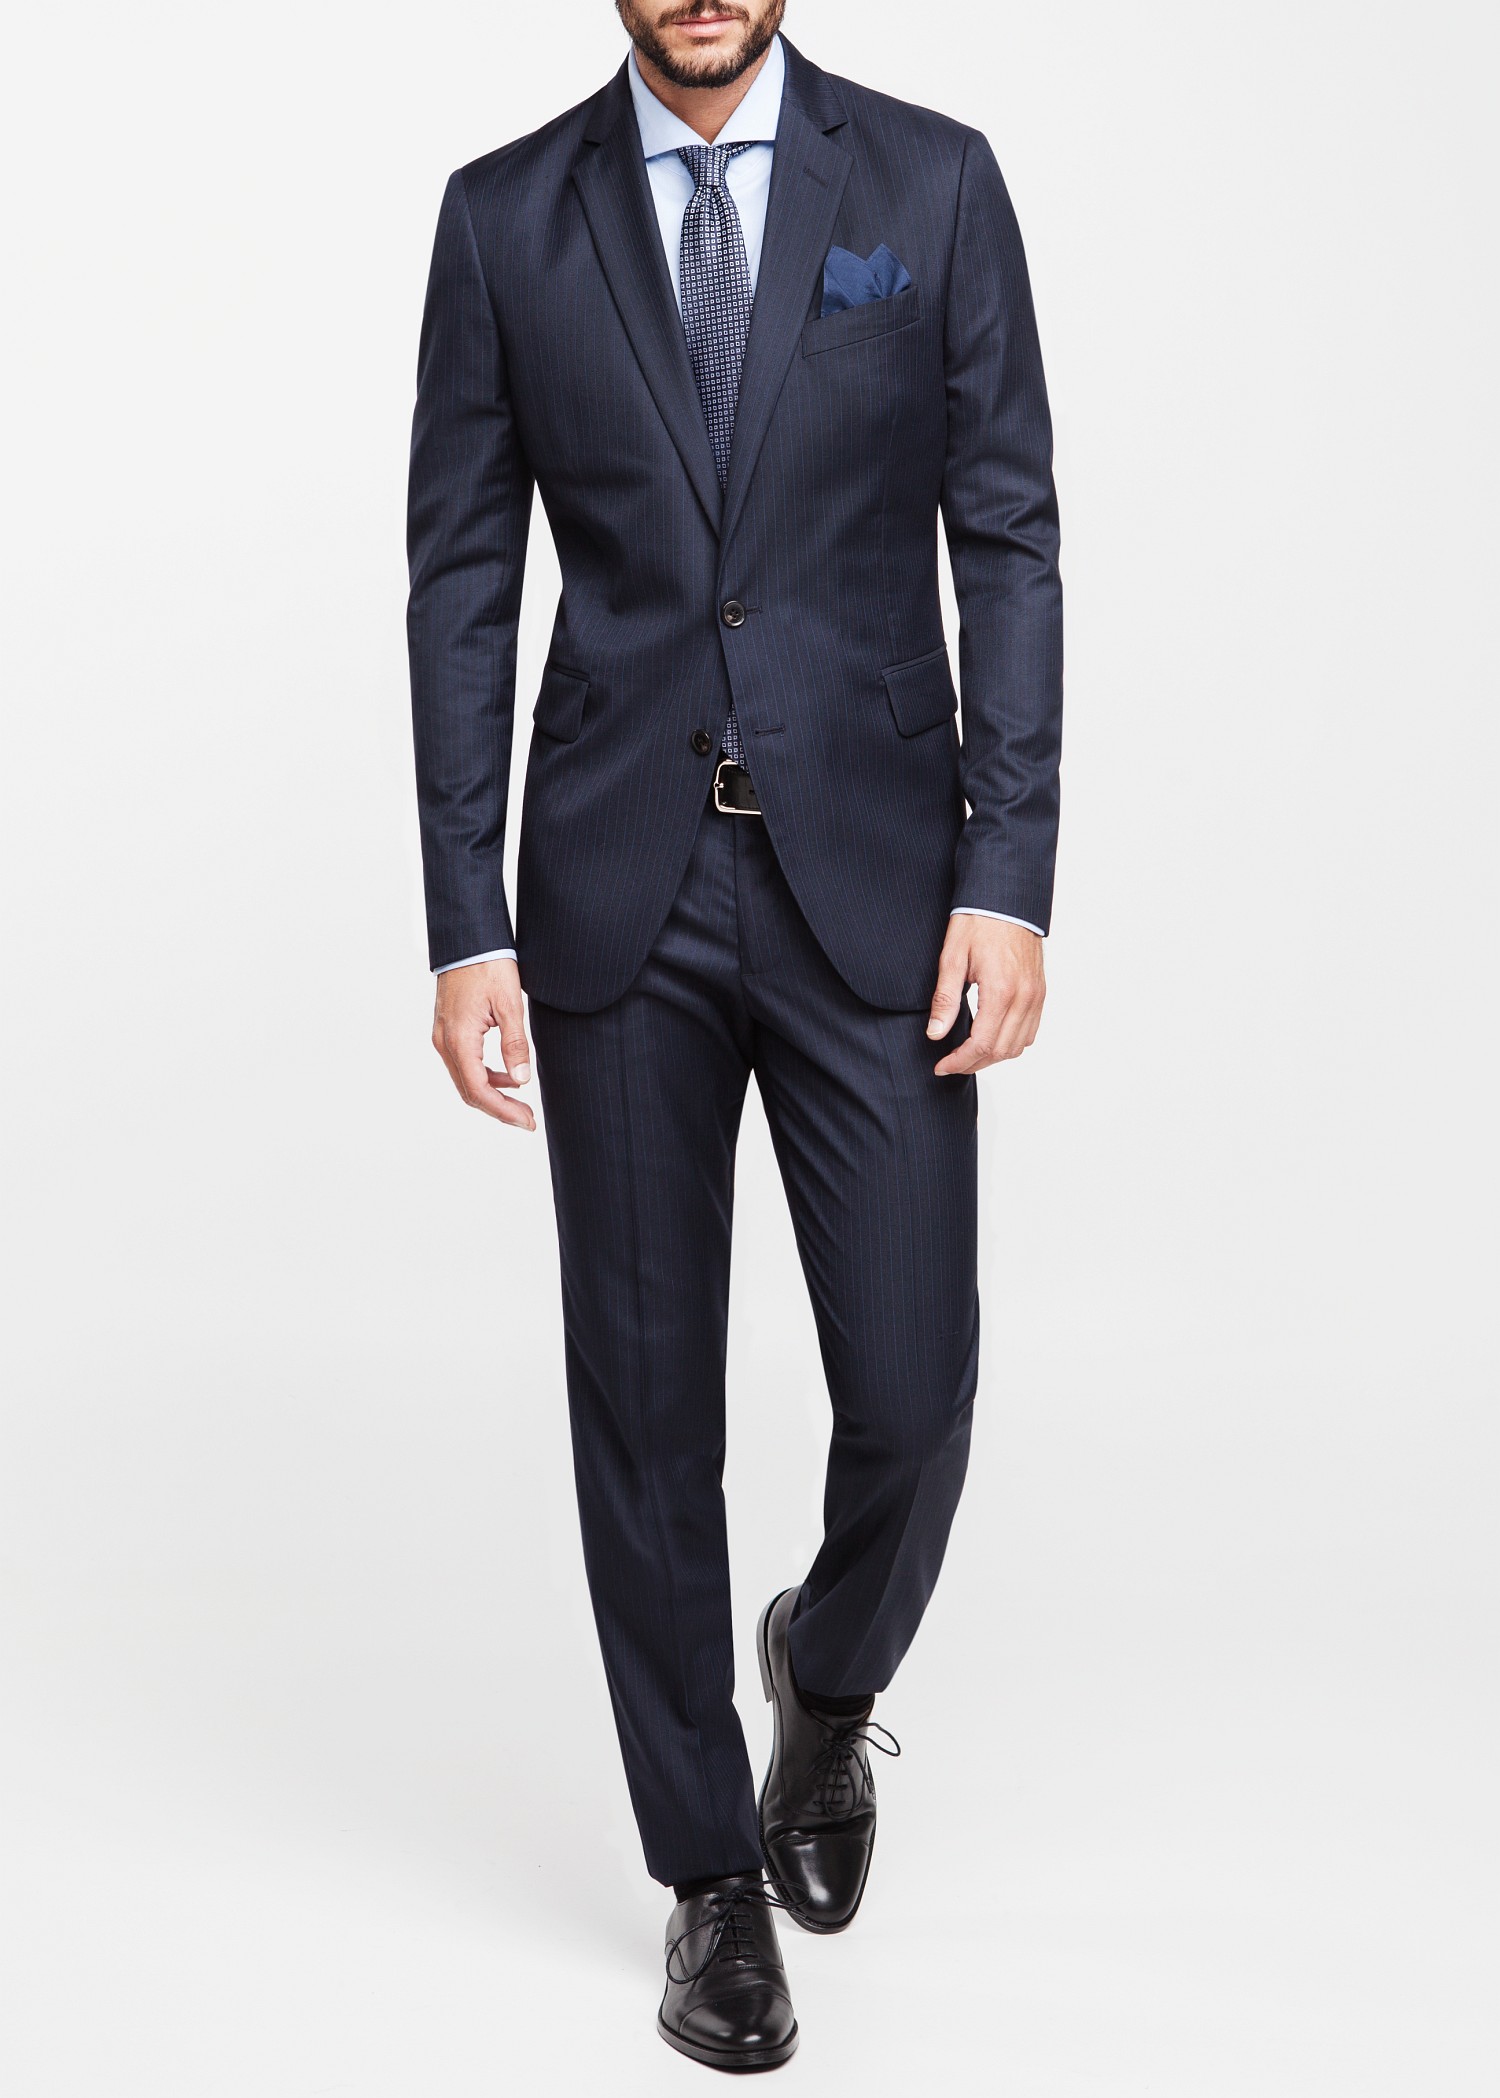 Lyst - Mango Suit Jacket Basiliac in Blue for Men